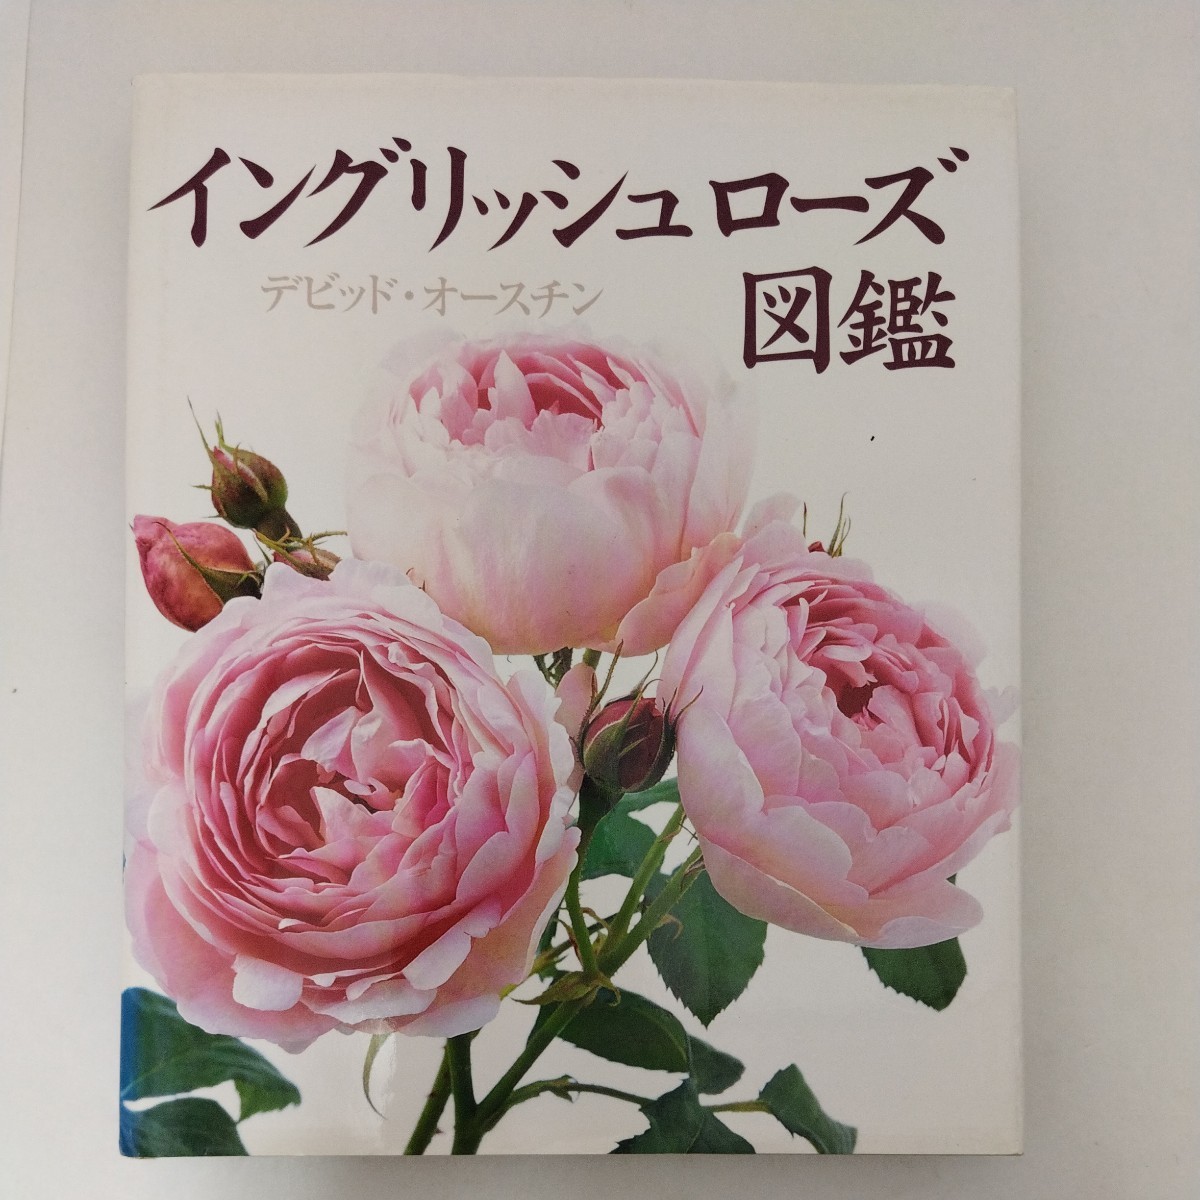  wing lishu rose illustrated reference book David * Austin middle .... translation flat hill . editing cooperation rose 